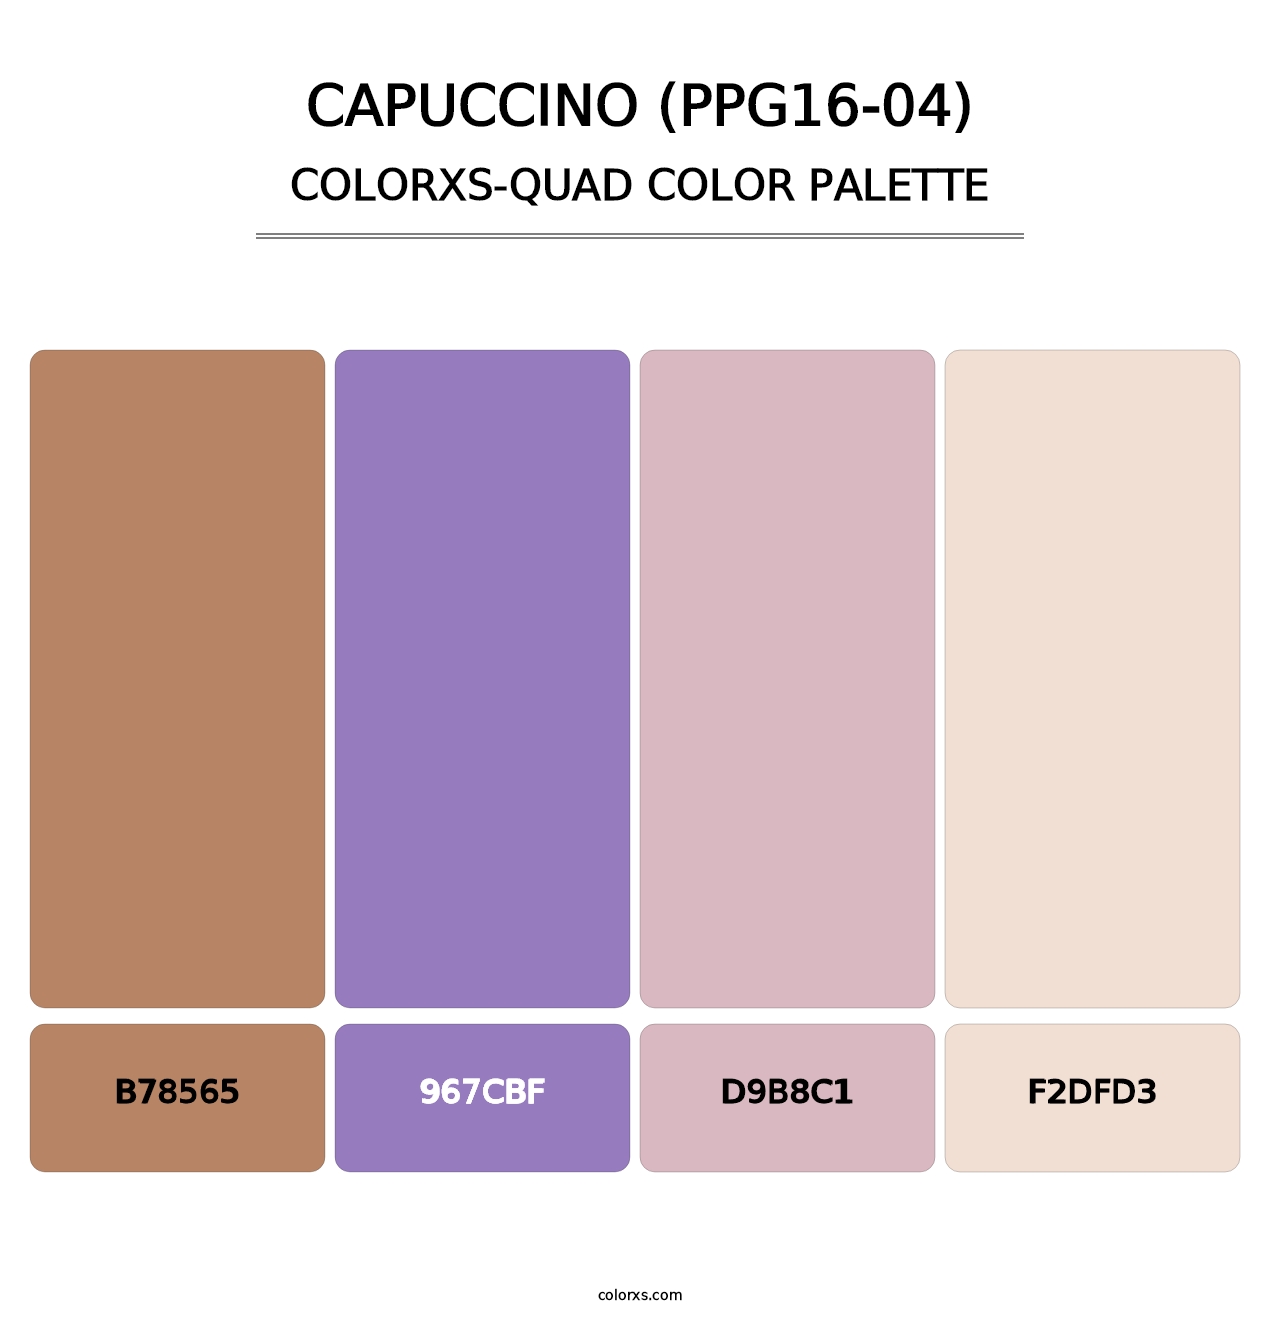 Capuccino (PPG16-04) - Colorxs Quad Palette